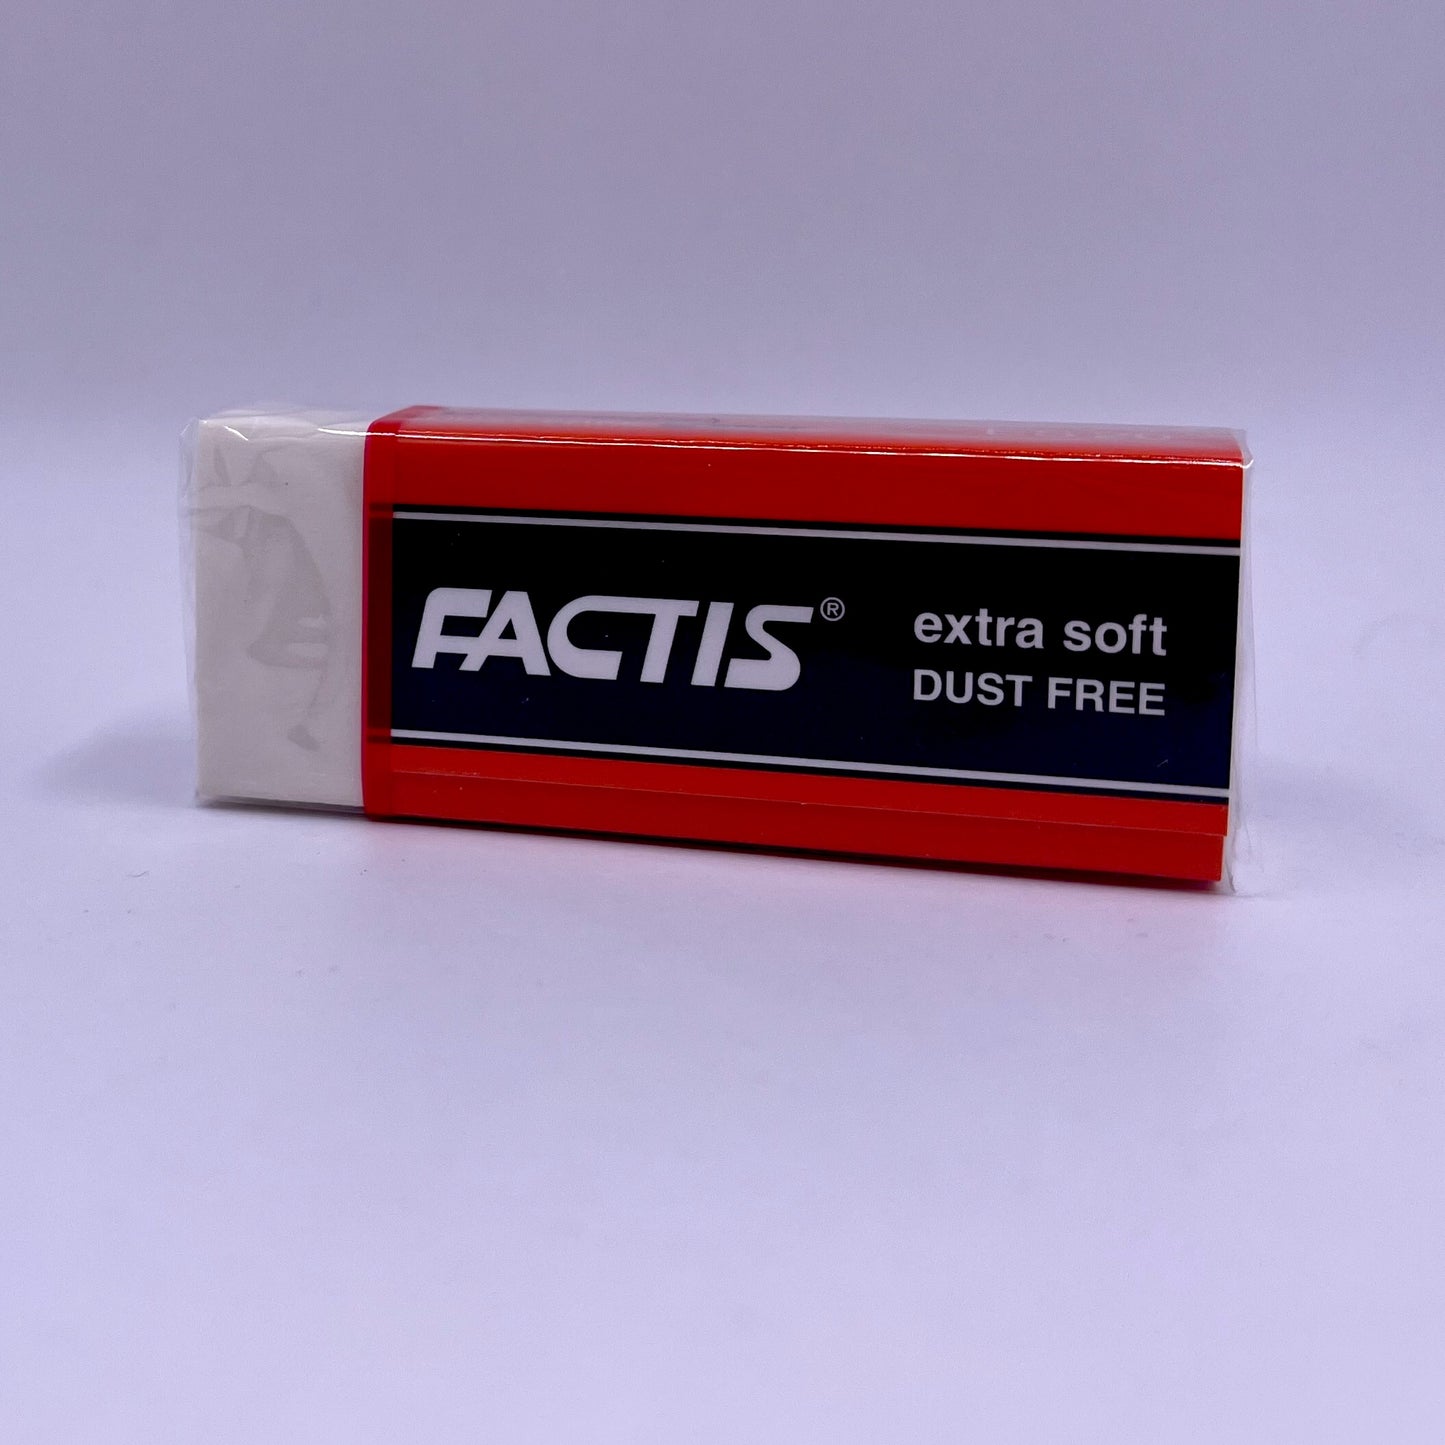 Factis Extra Soft Erasers